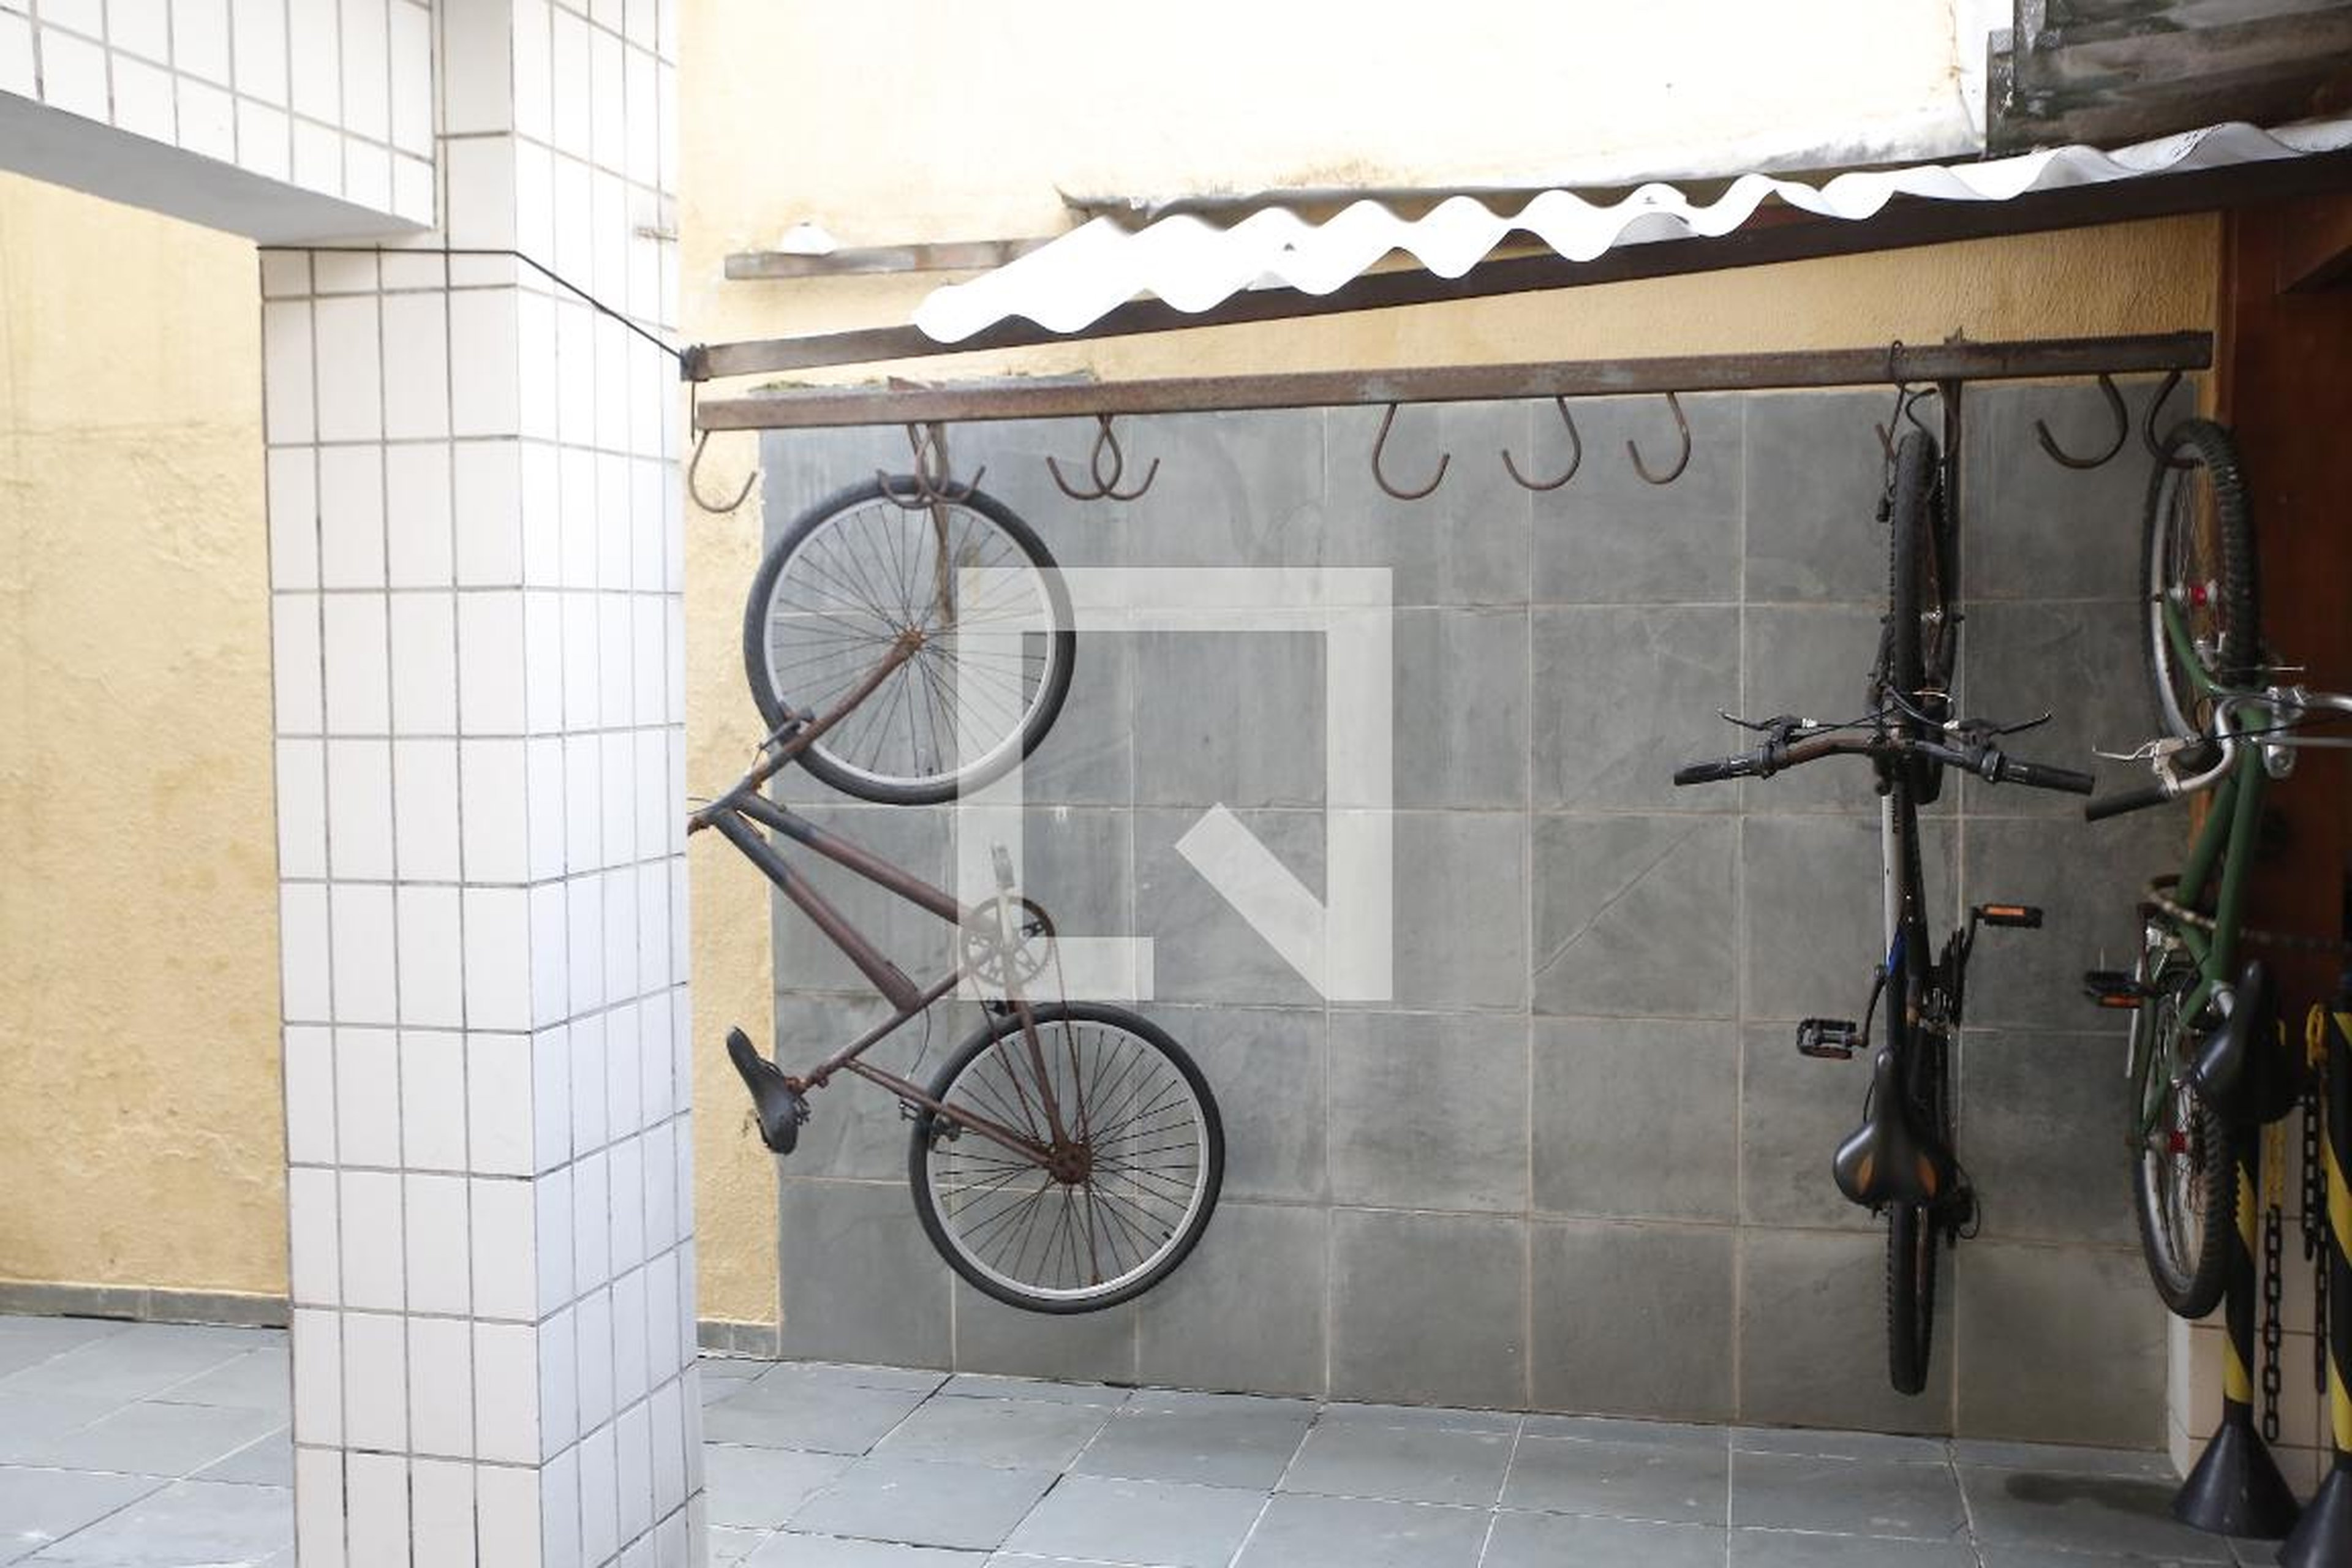 Bicicletario - Edifício Lapidus